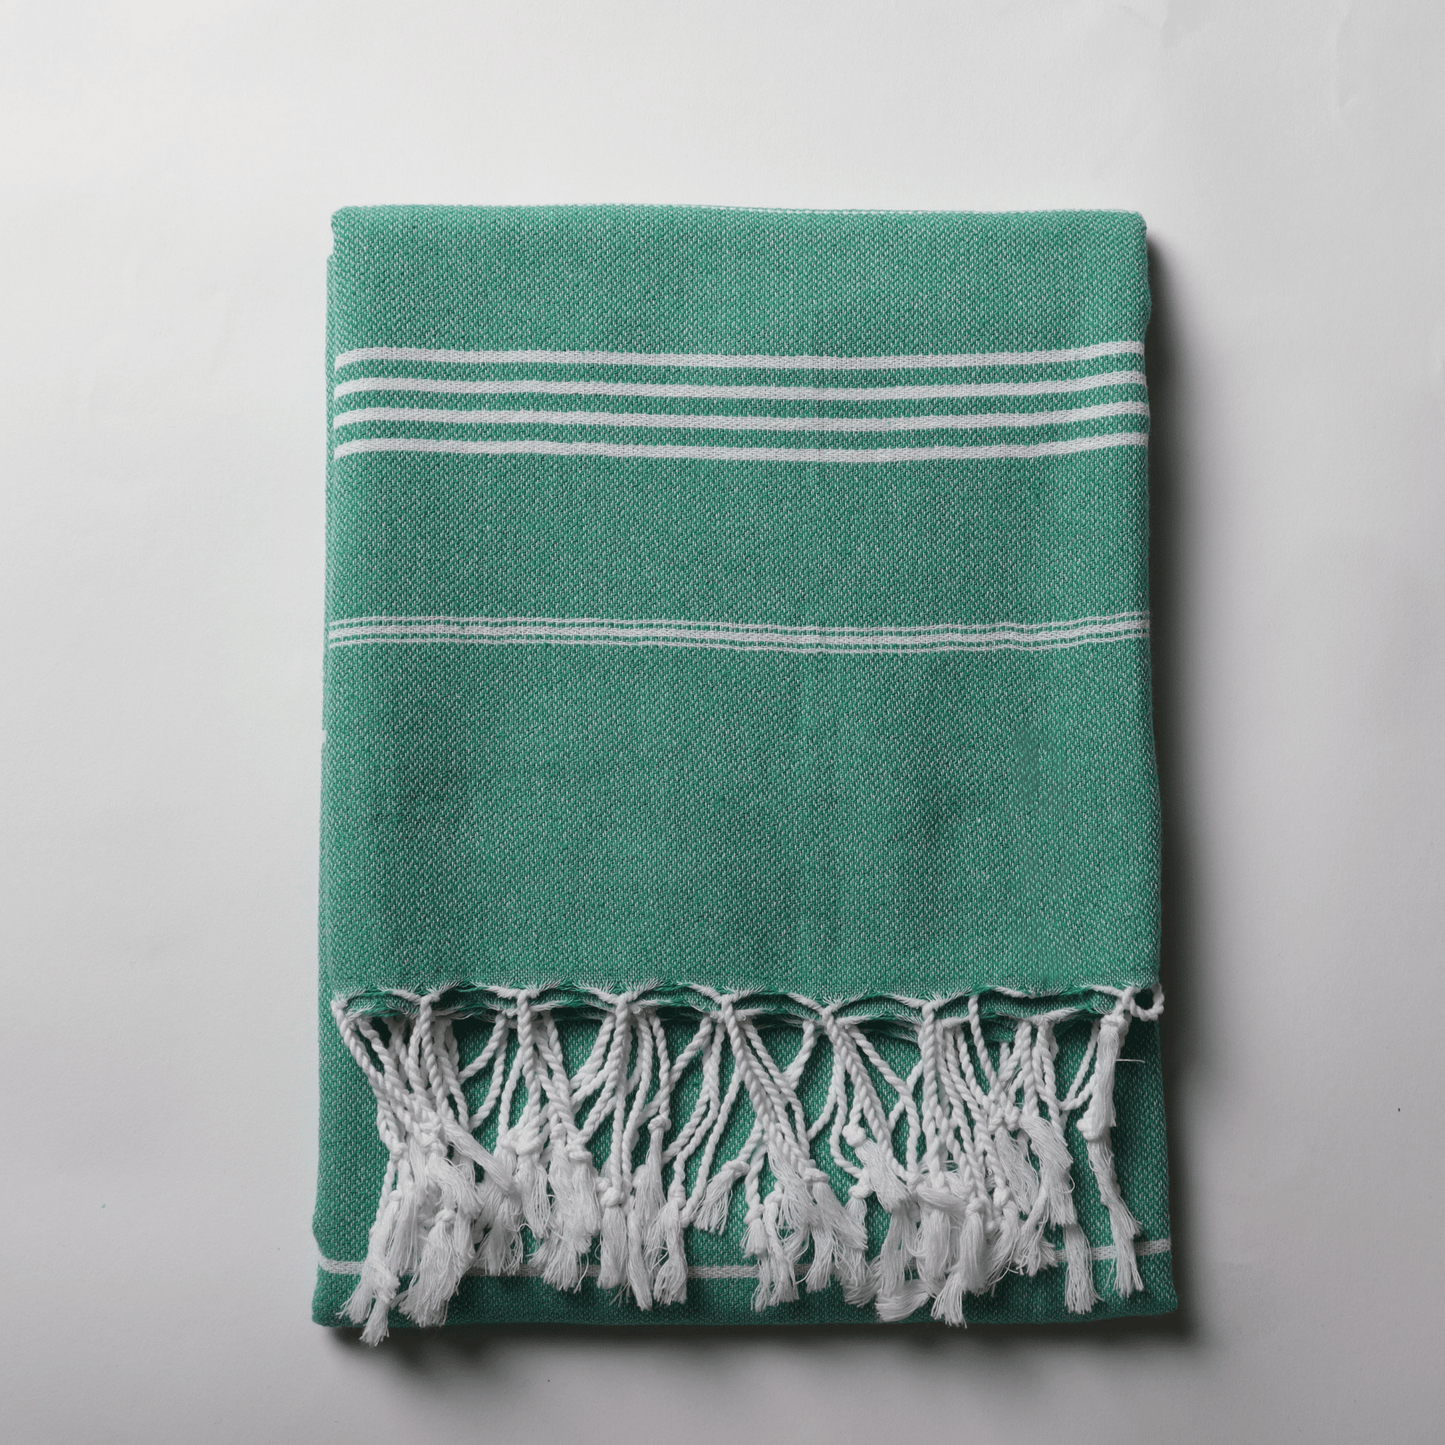 Green Turkish Beach Towel Sultan - Wholesale and Bulk Turkish Towels